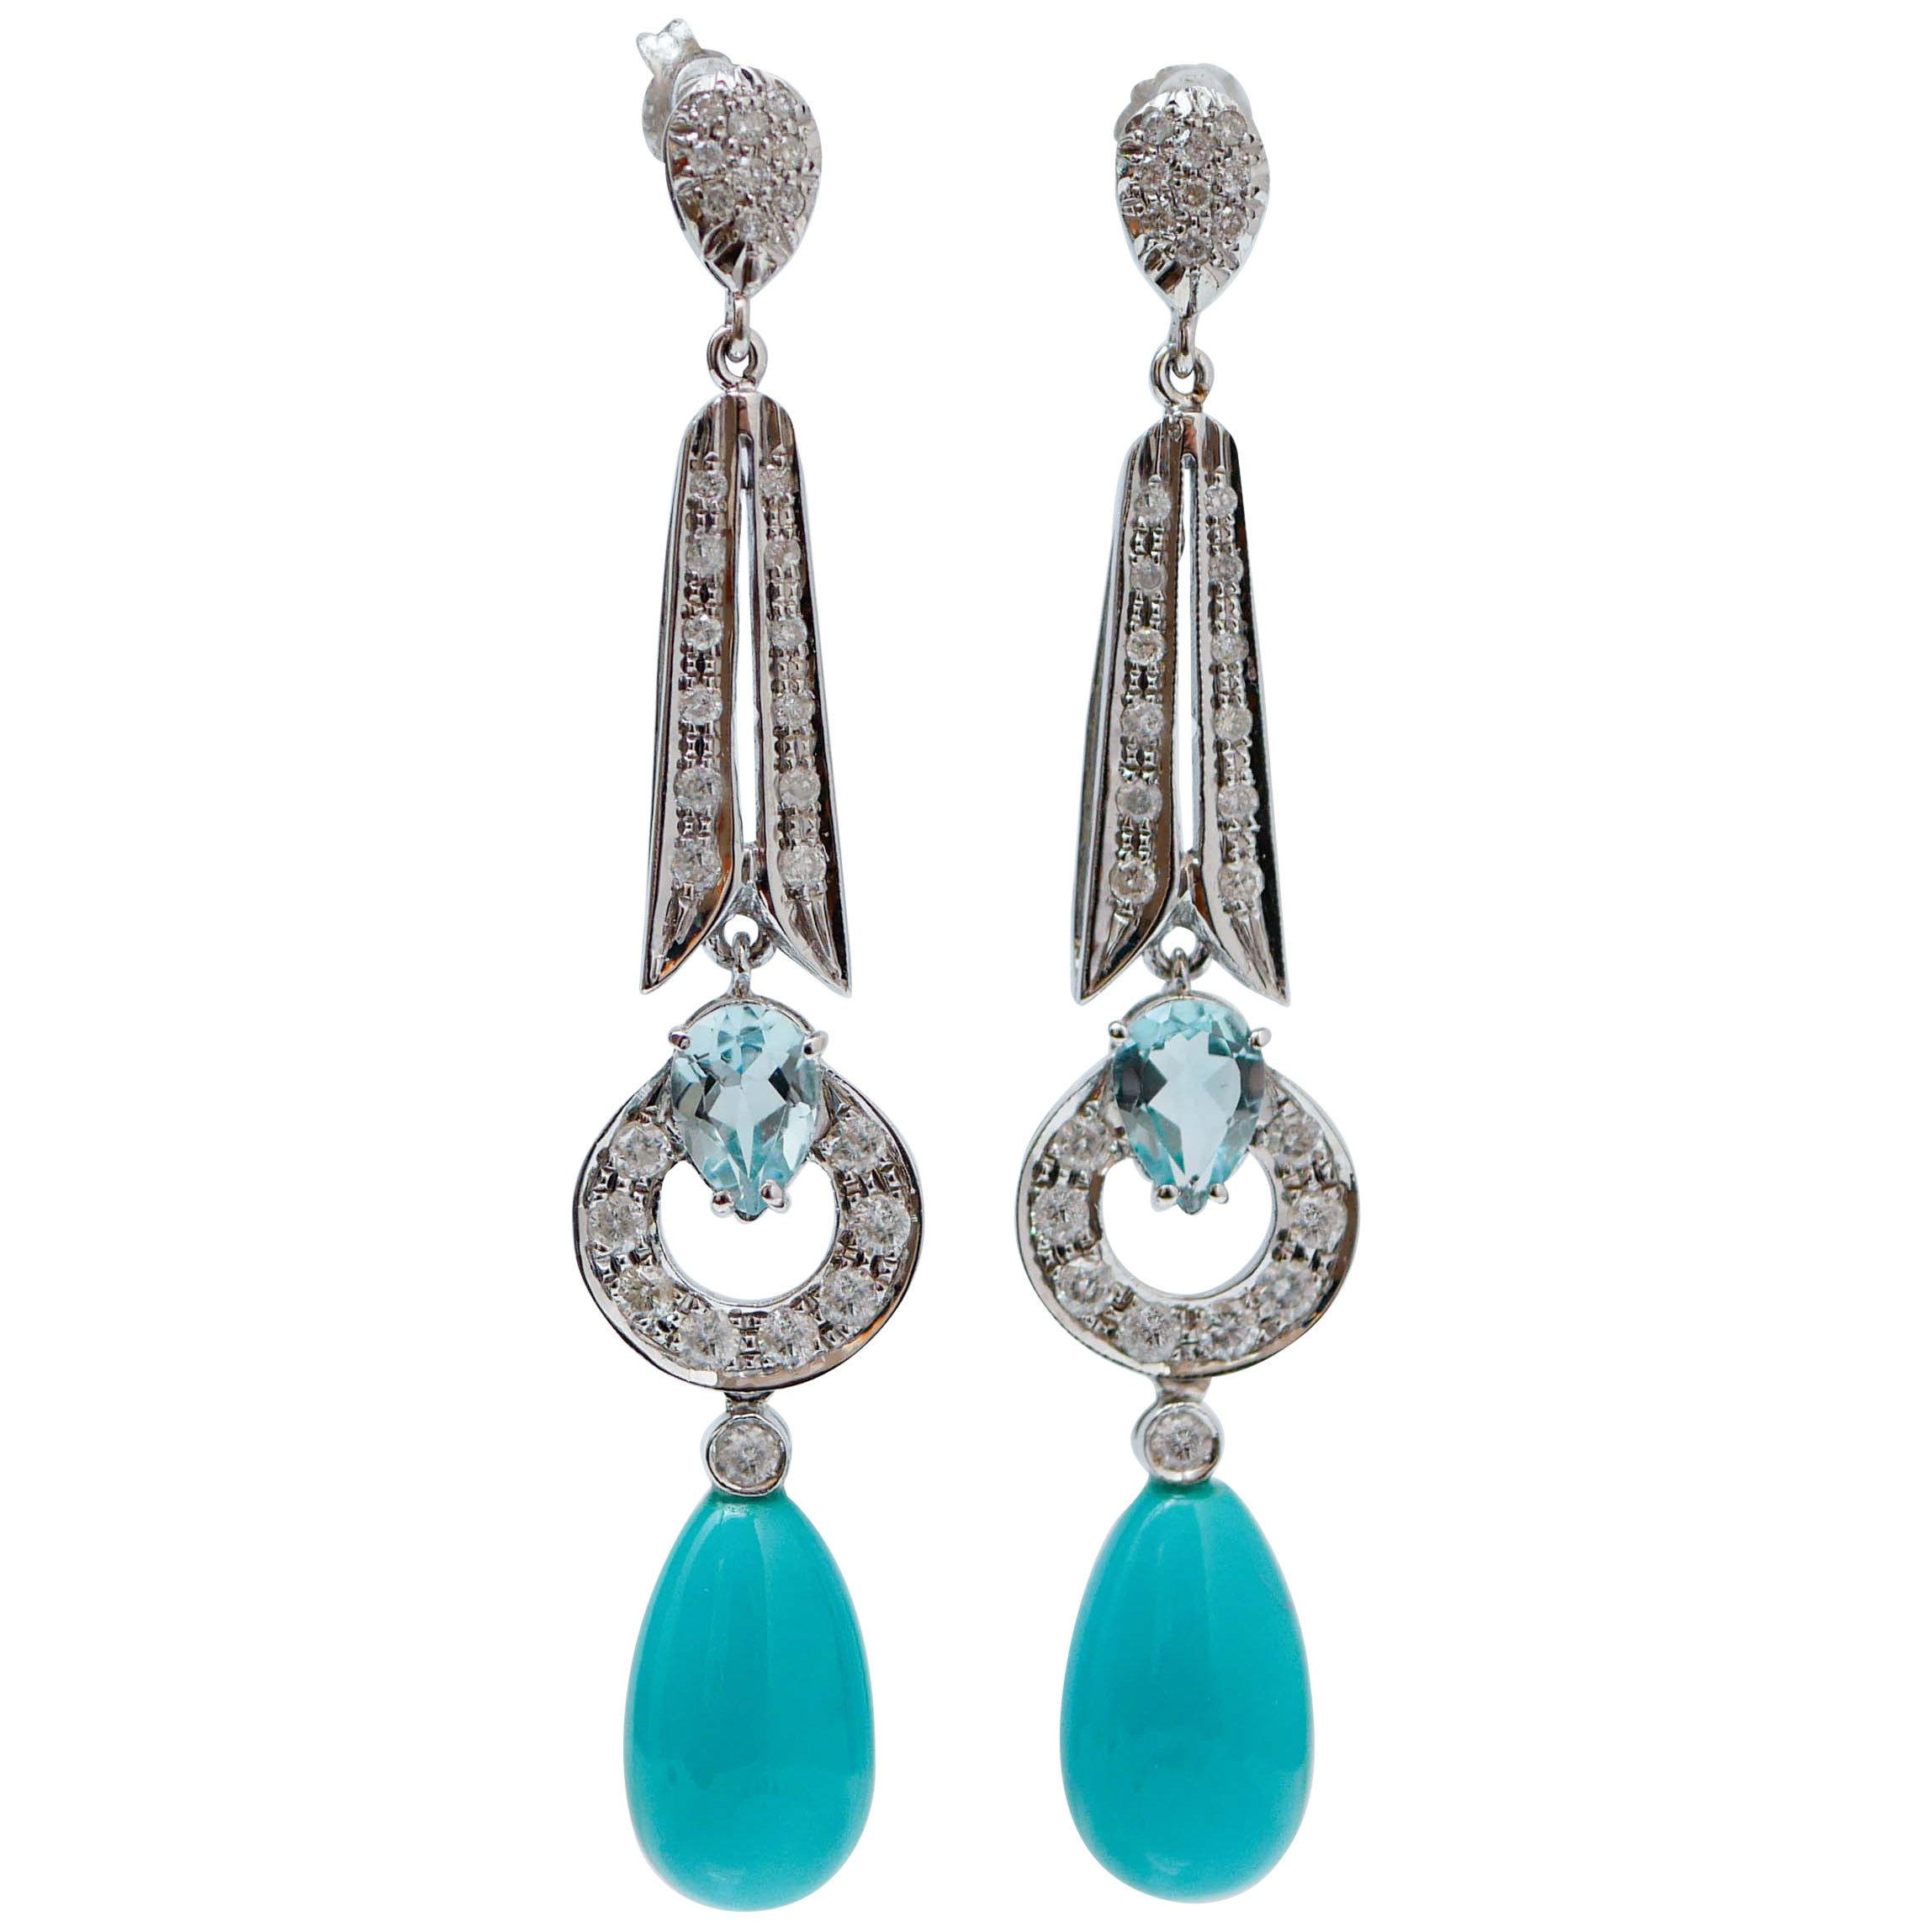 Turquoise, Topazs, Diamonds, 14 Karat White Gold Dangle Earrings.